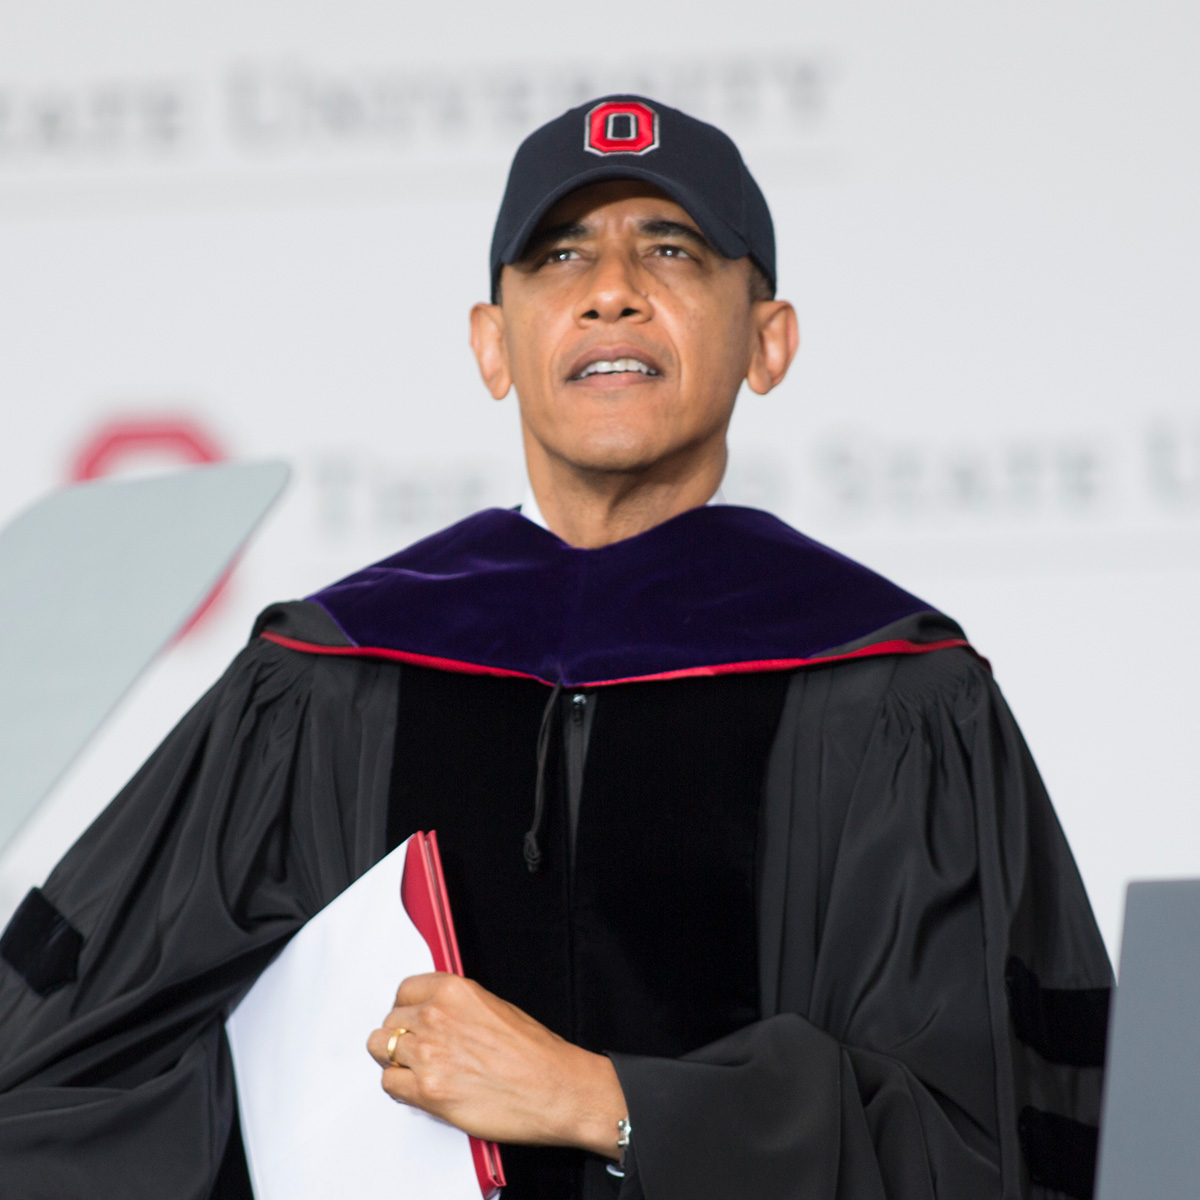 Former President Obama wears a block O baseball cap and grad robes.